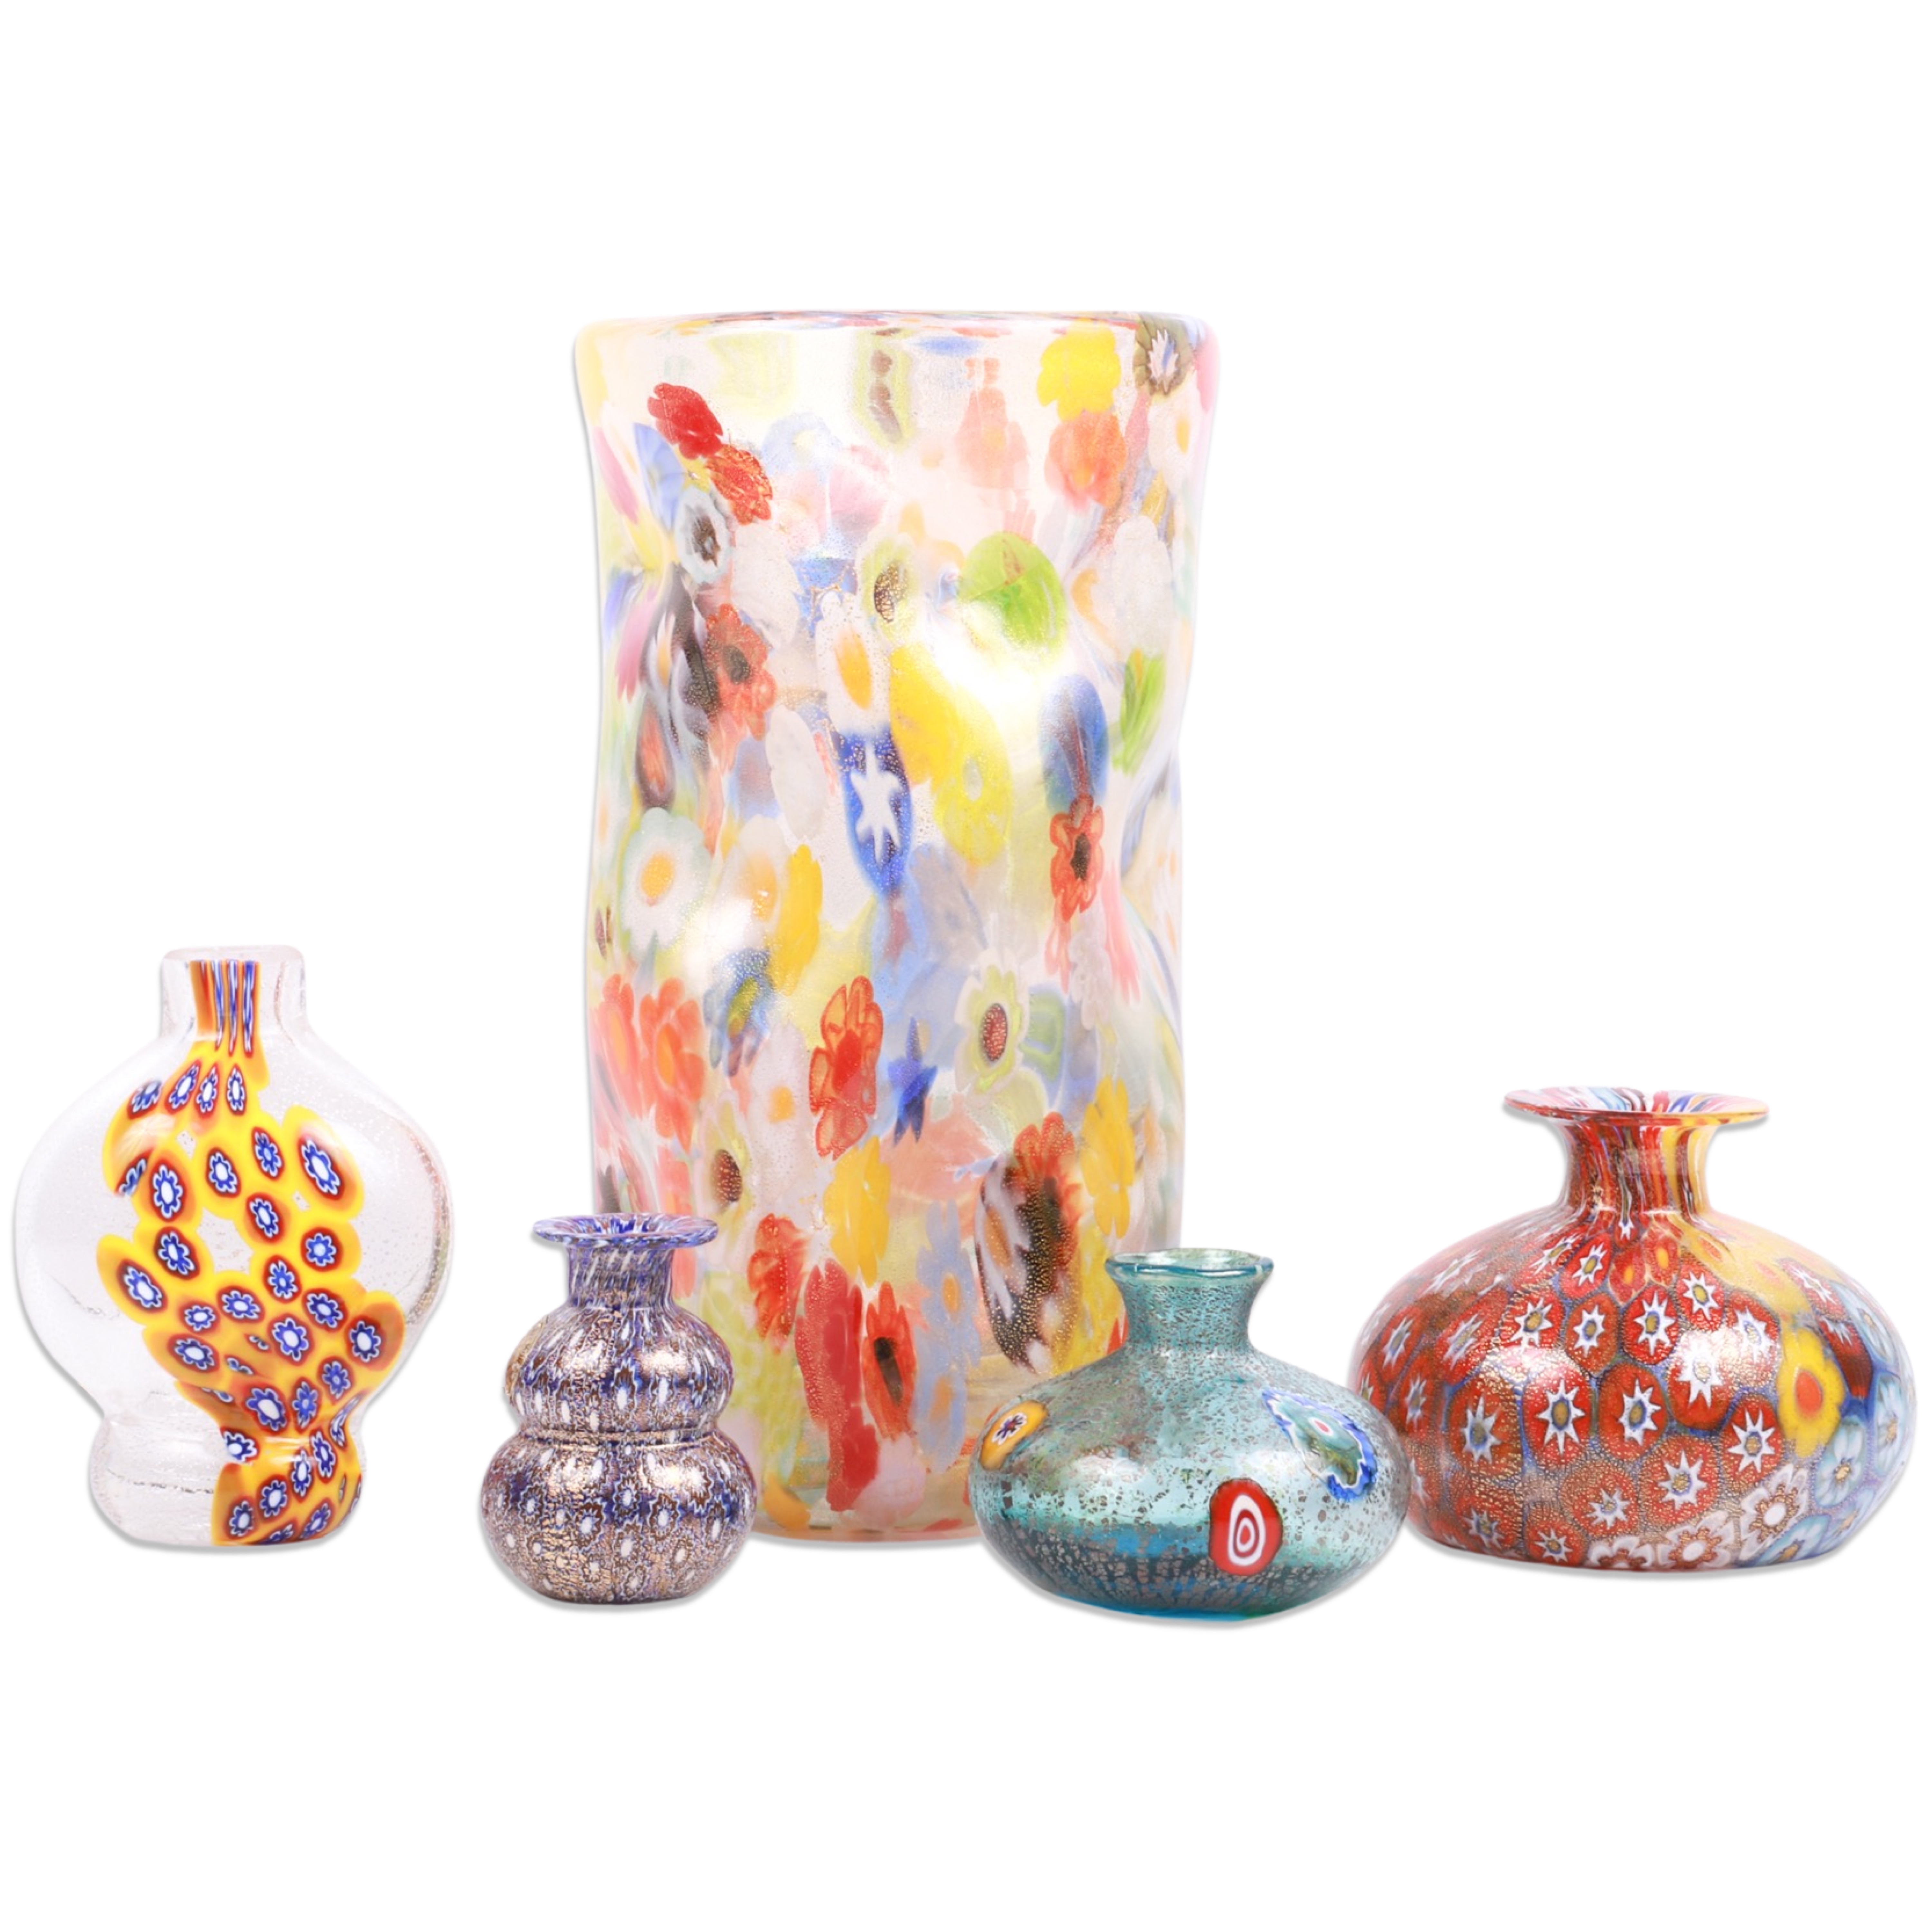  5 Millefiori art glass vases 3b45db